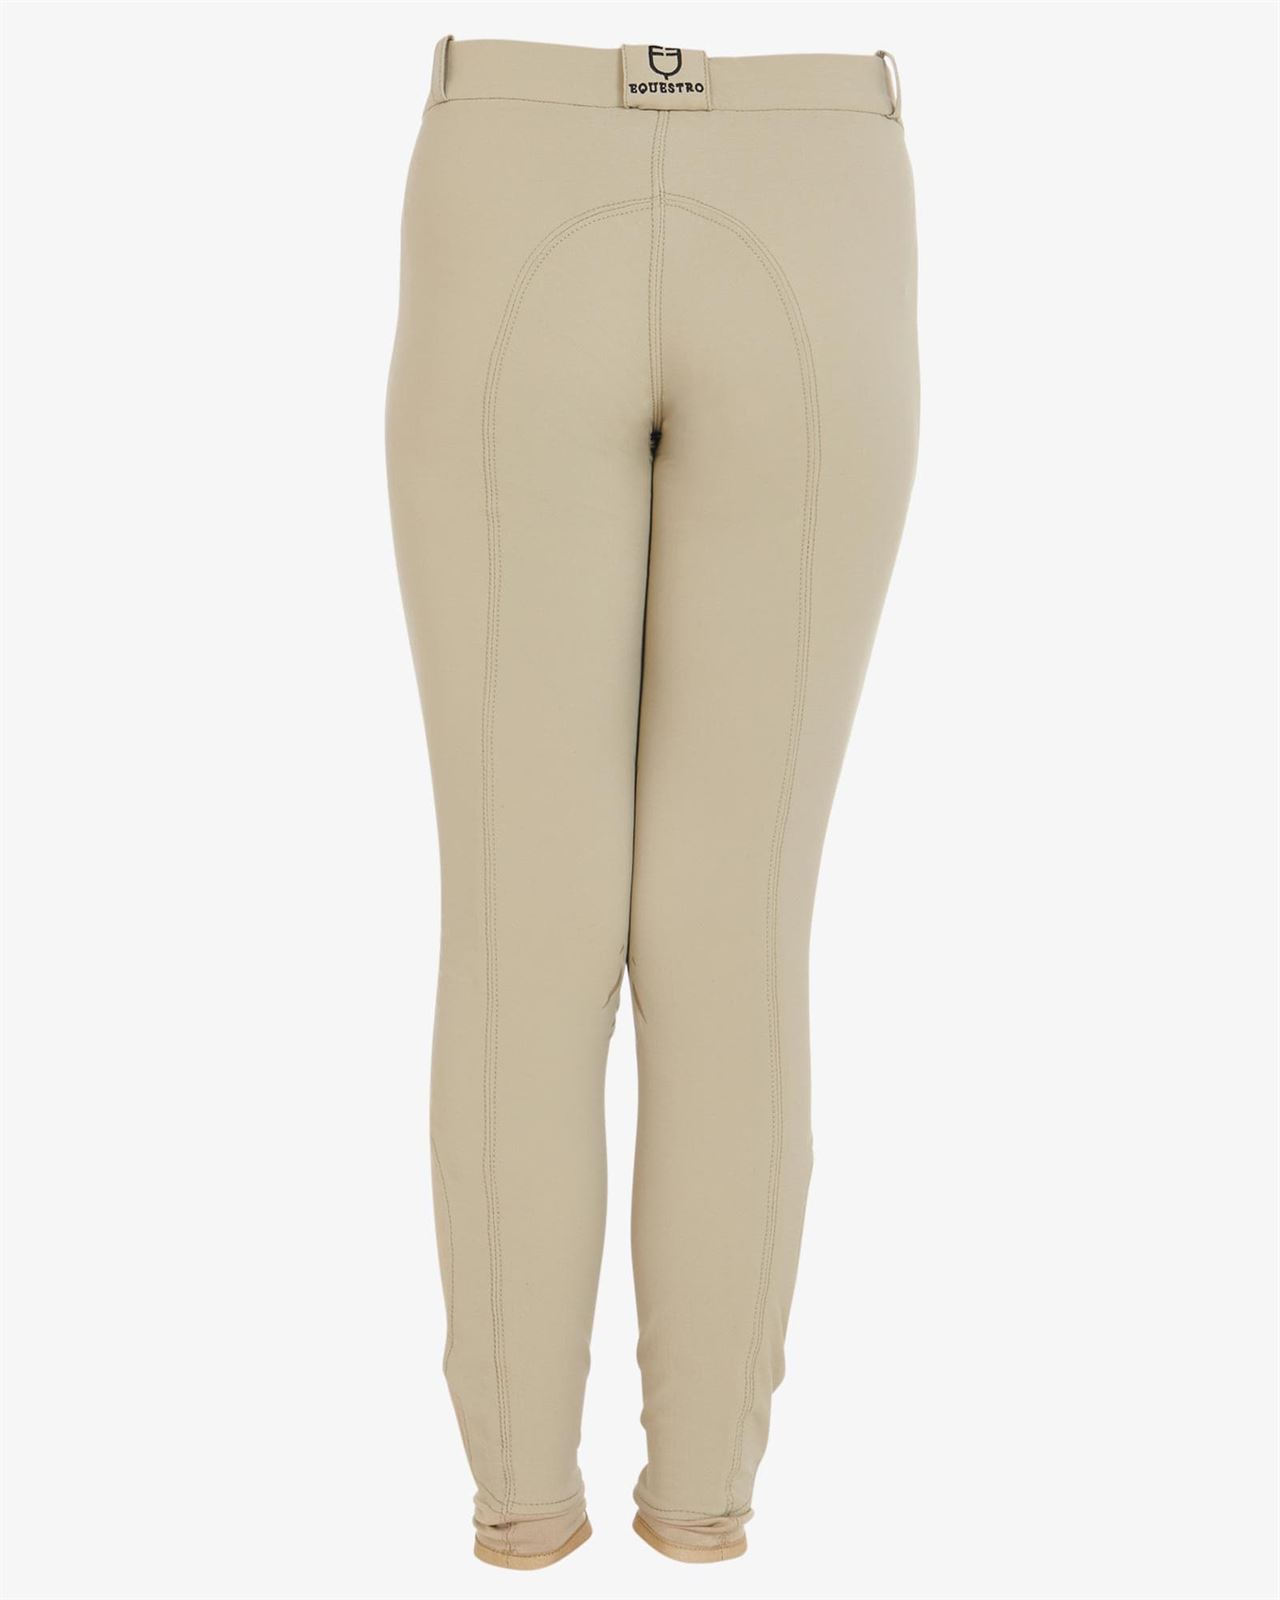 Pantalón unisex EQUESTRO color beige, grip rodilla, tallaje infantil - Imagen 4